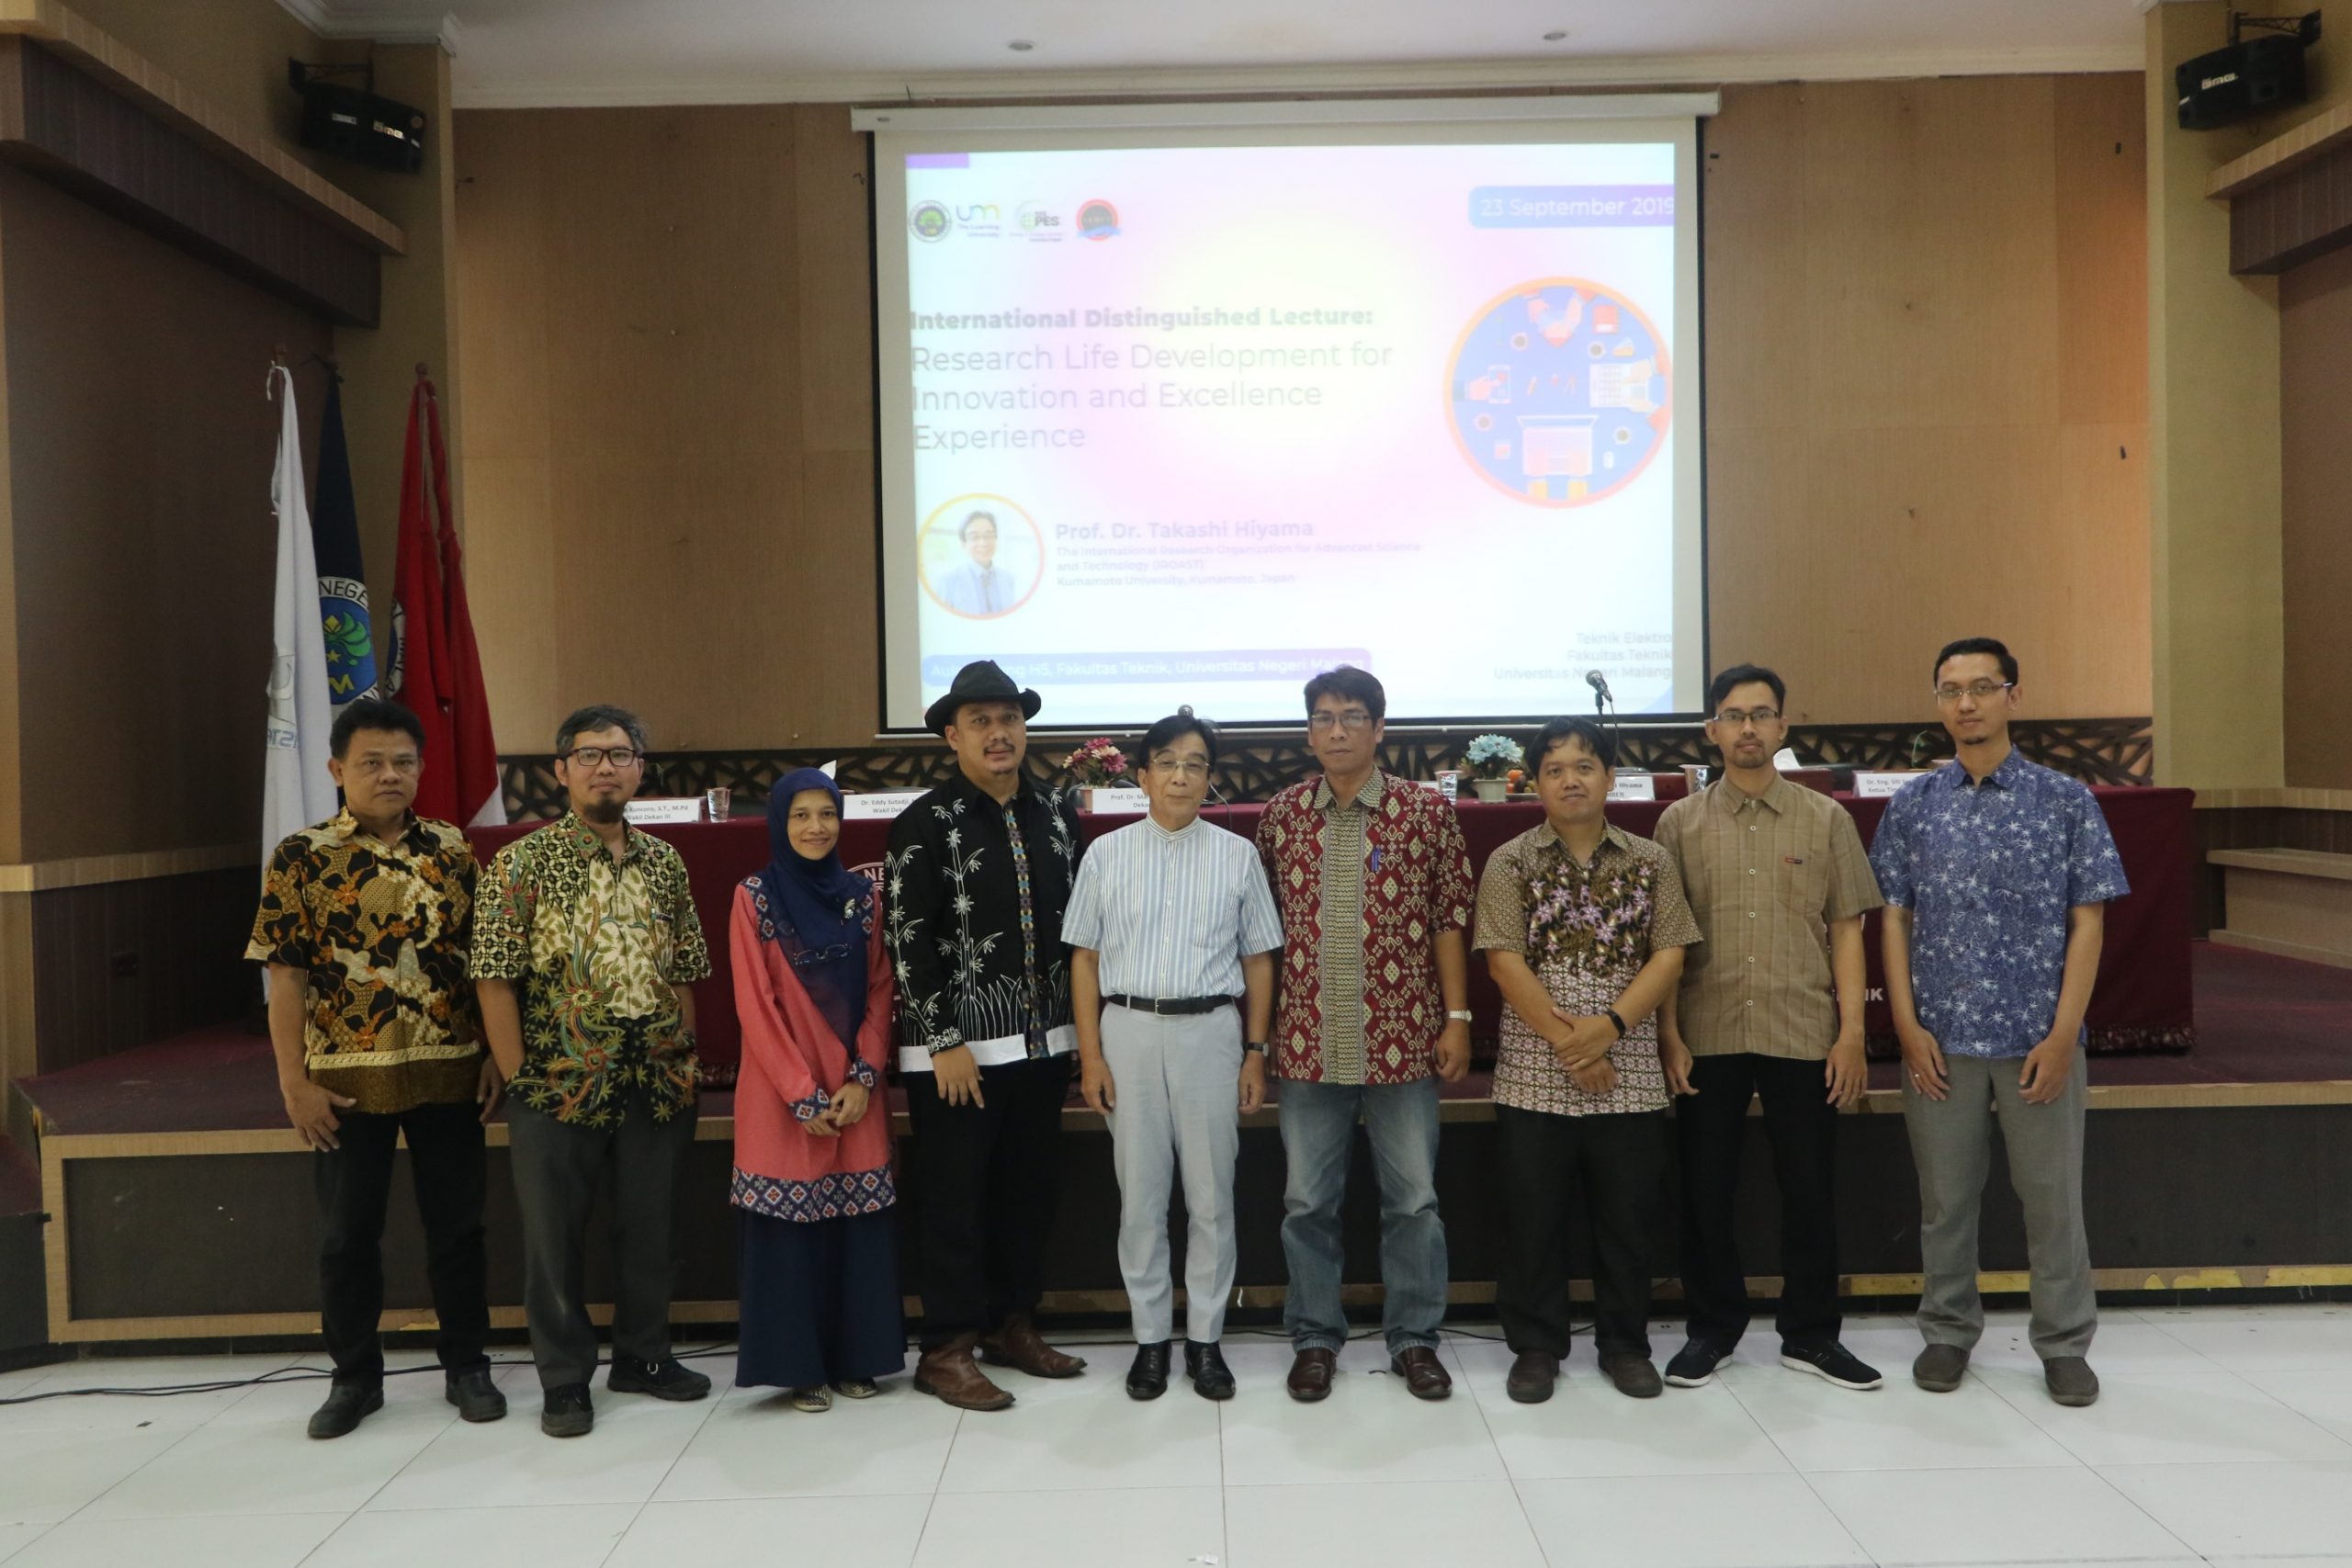 Kuliah Tamu (International Guest Lecture) : Research Life Development for Innovation and Excellence Experience – Jurusan Teknik Elektro FT UM